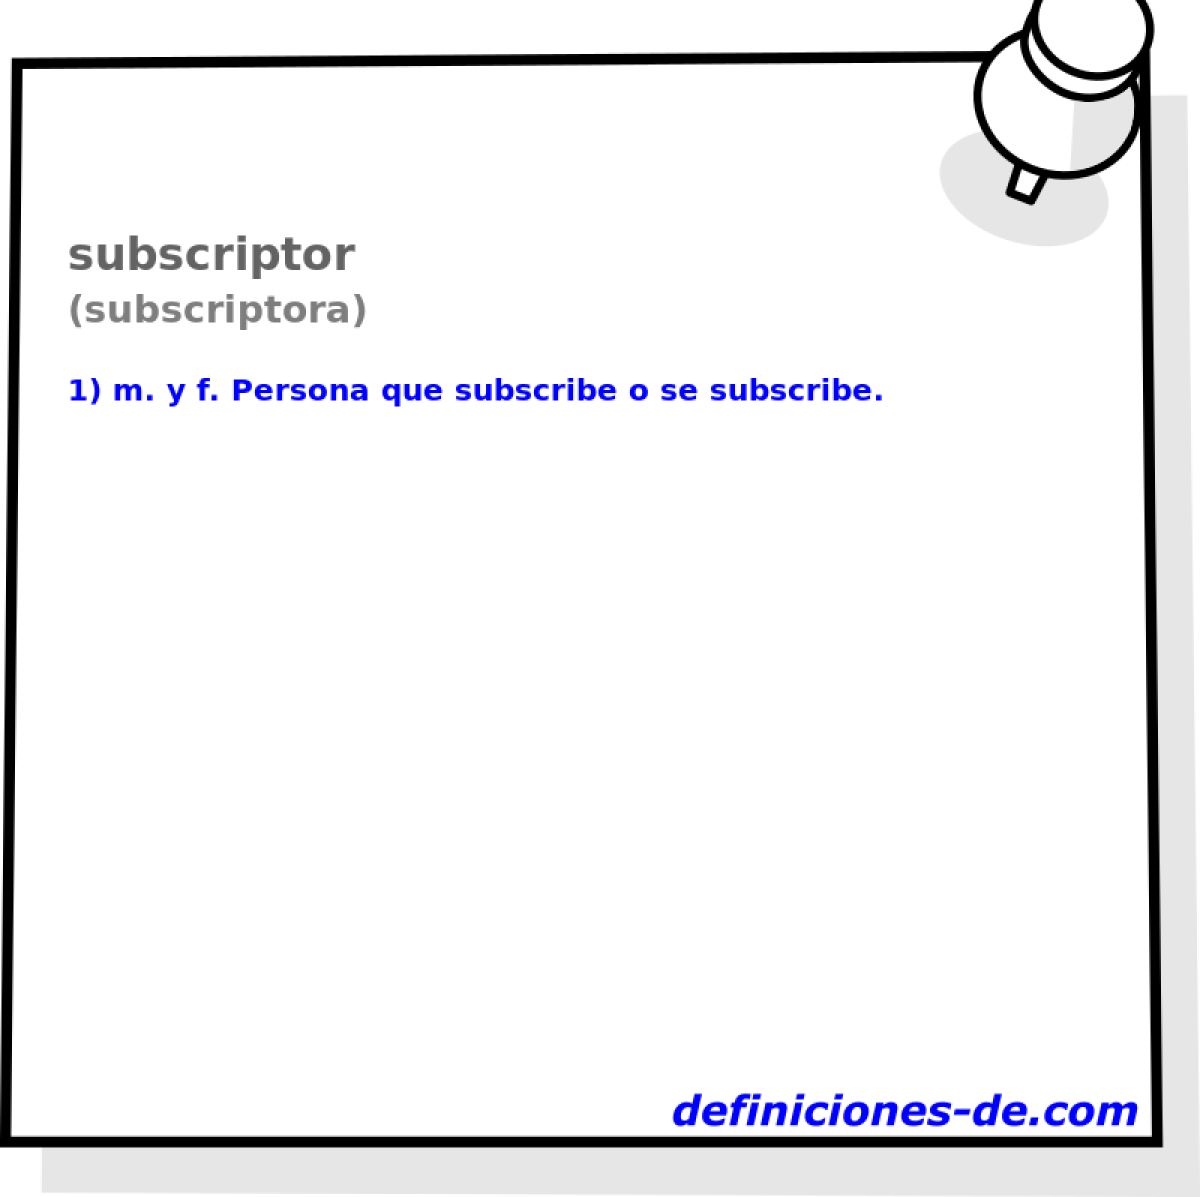 subscriptor (subscriptora)